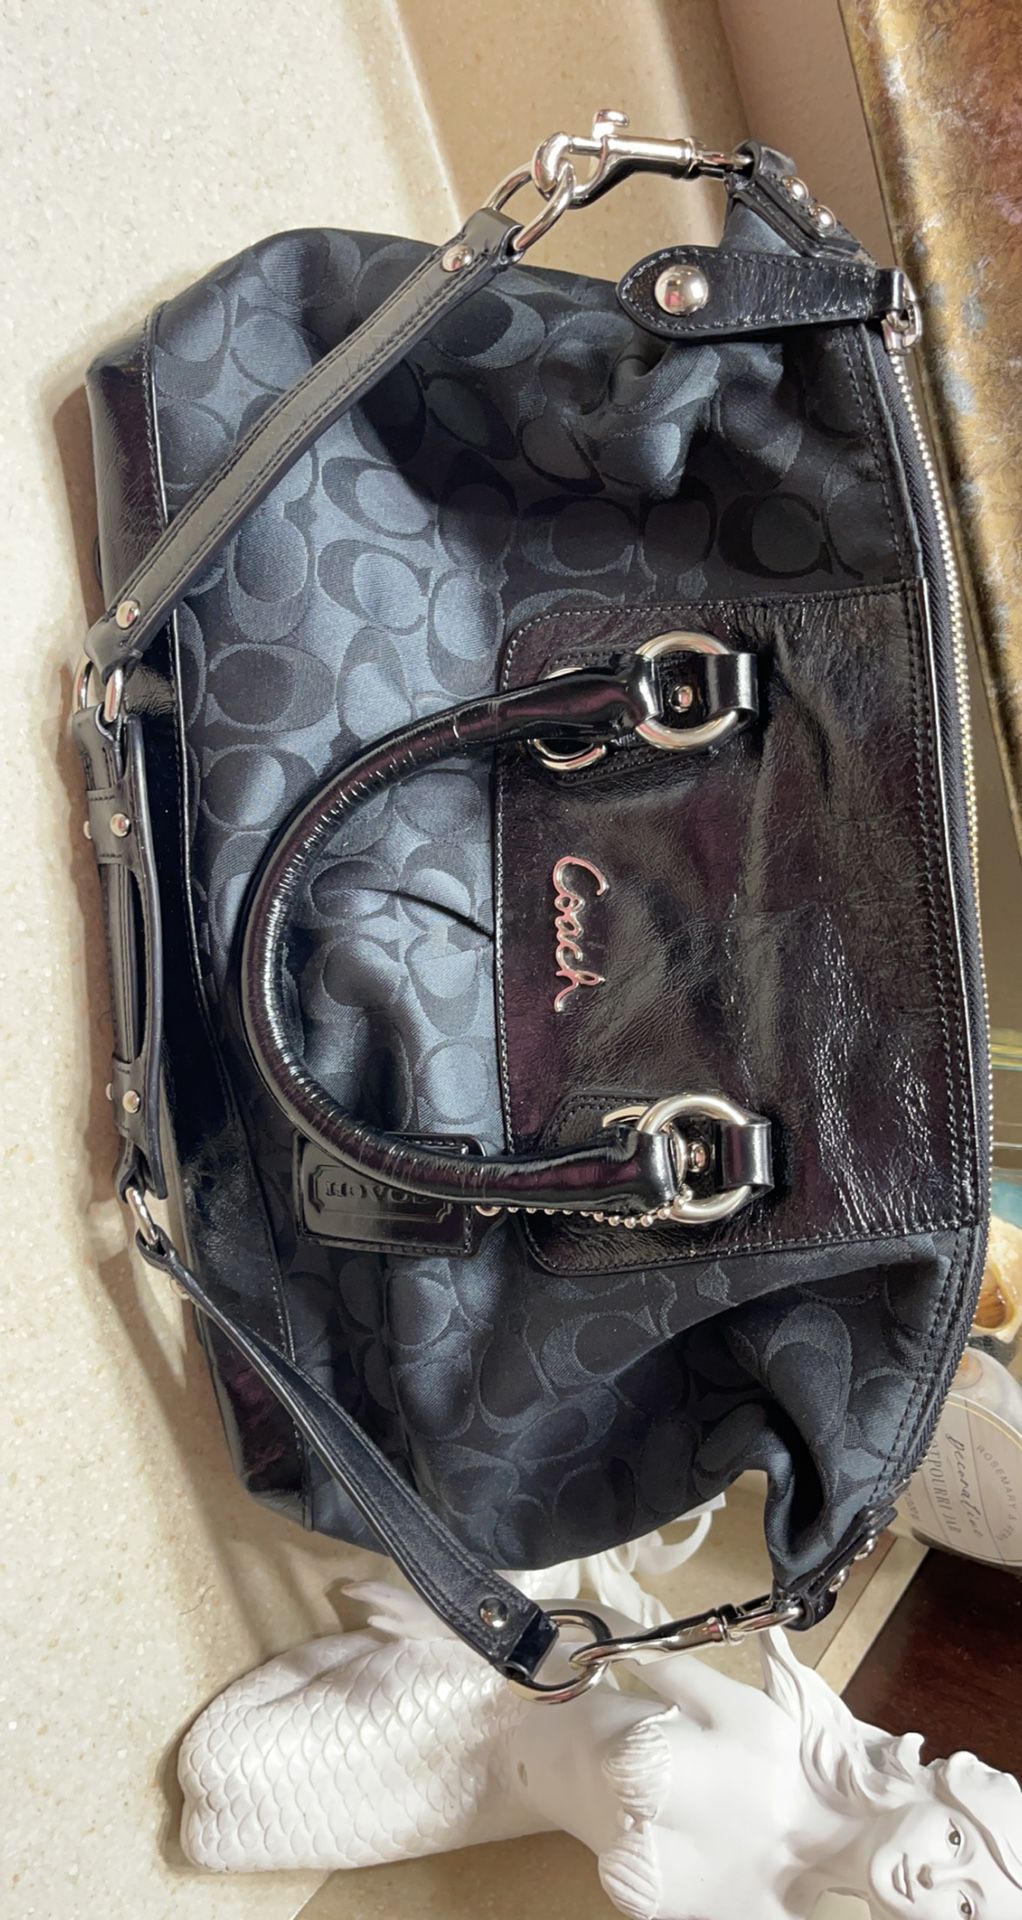 Black Coach purse